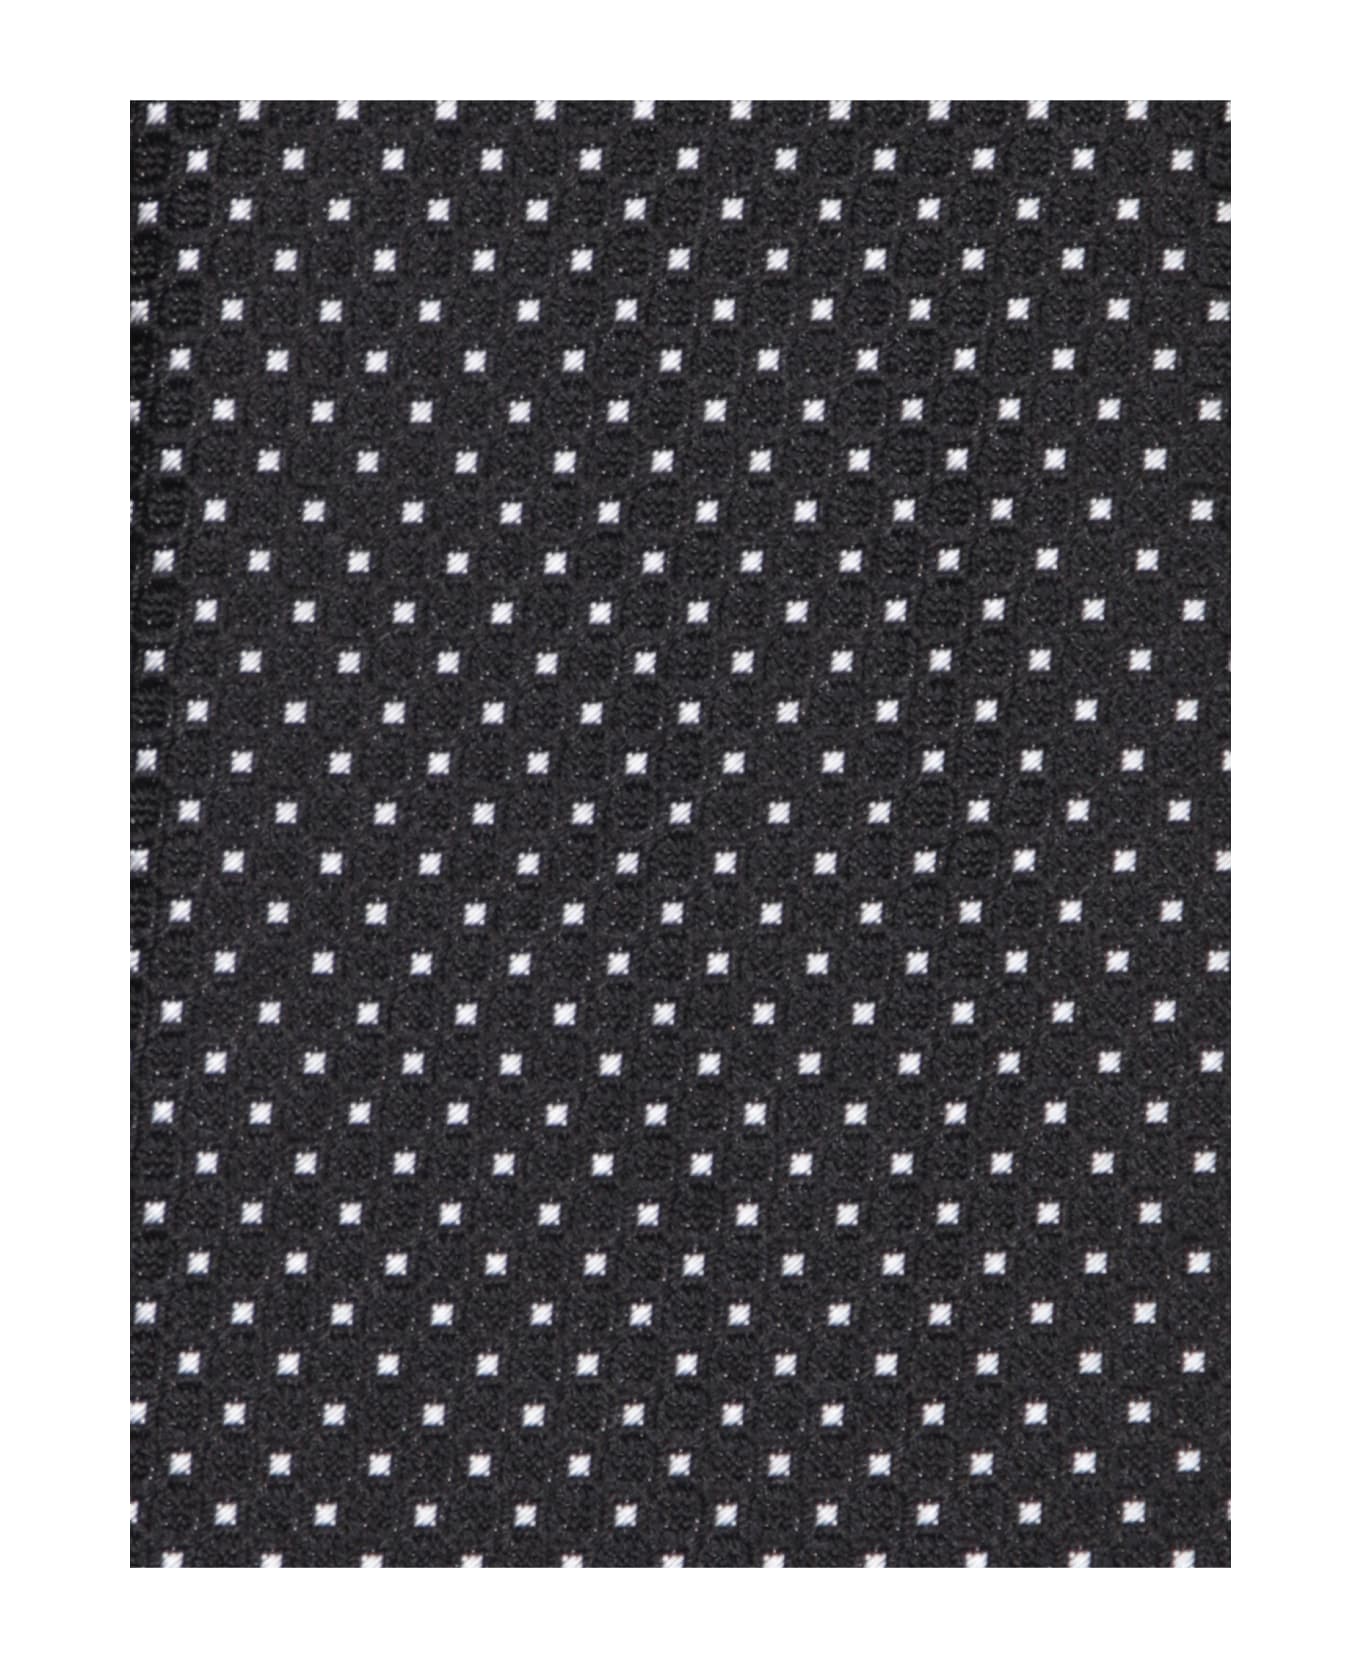 Canali Micropattern Square White/black Tie - Black ネクタイ